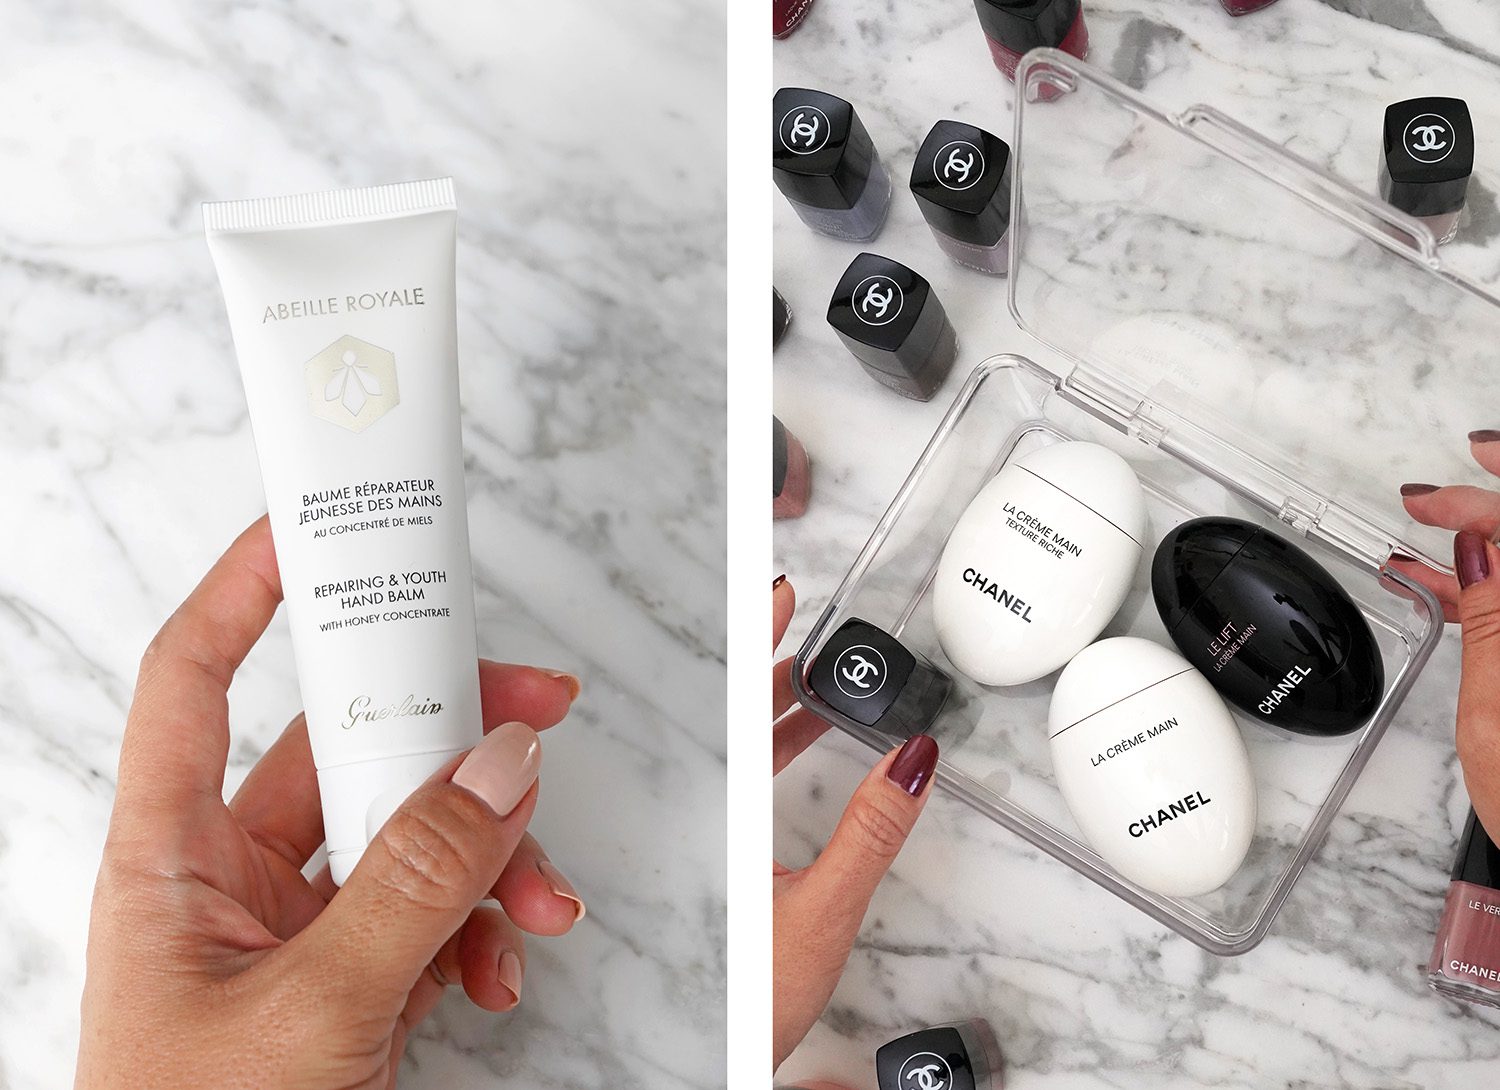 Chanel Le Lift Serum and Hand Cream - Skincare 2019 Chanel Le Lift Serum  and Hand Cream